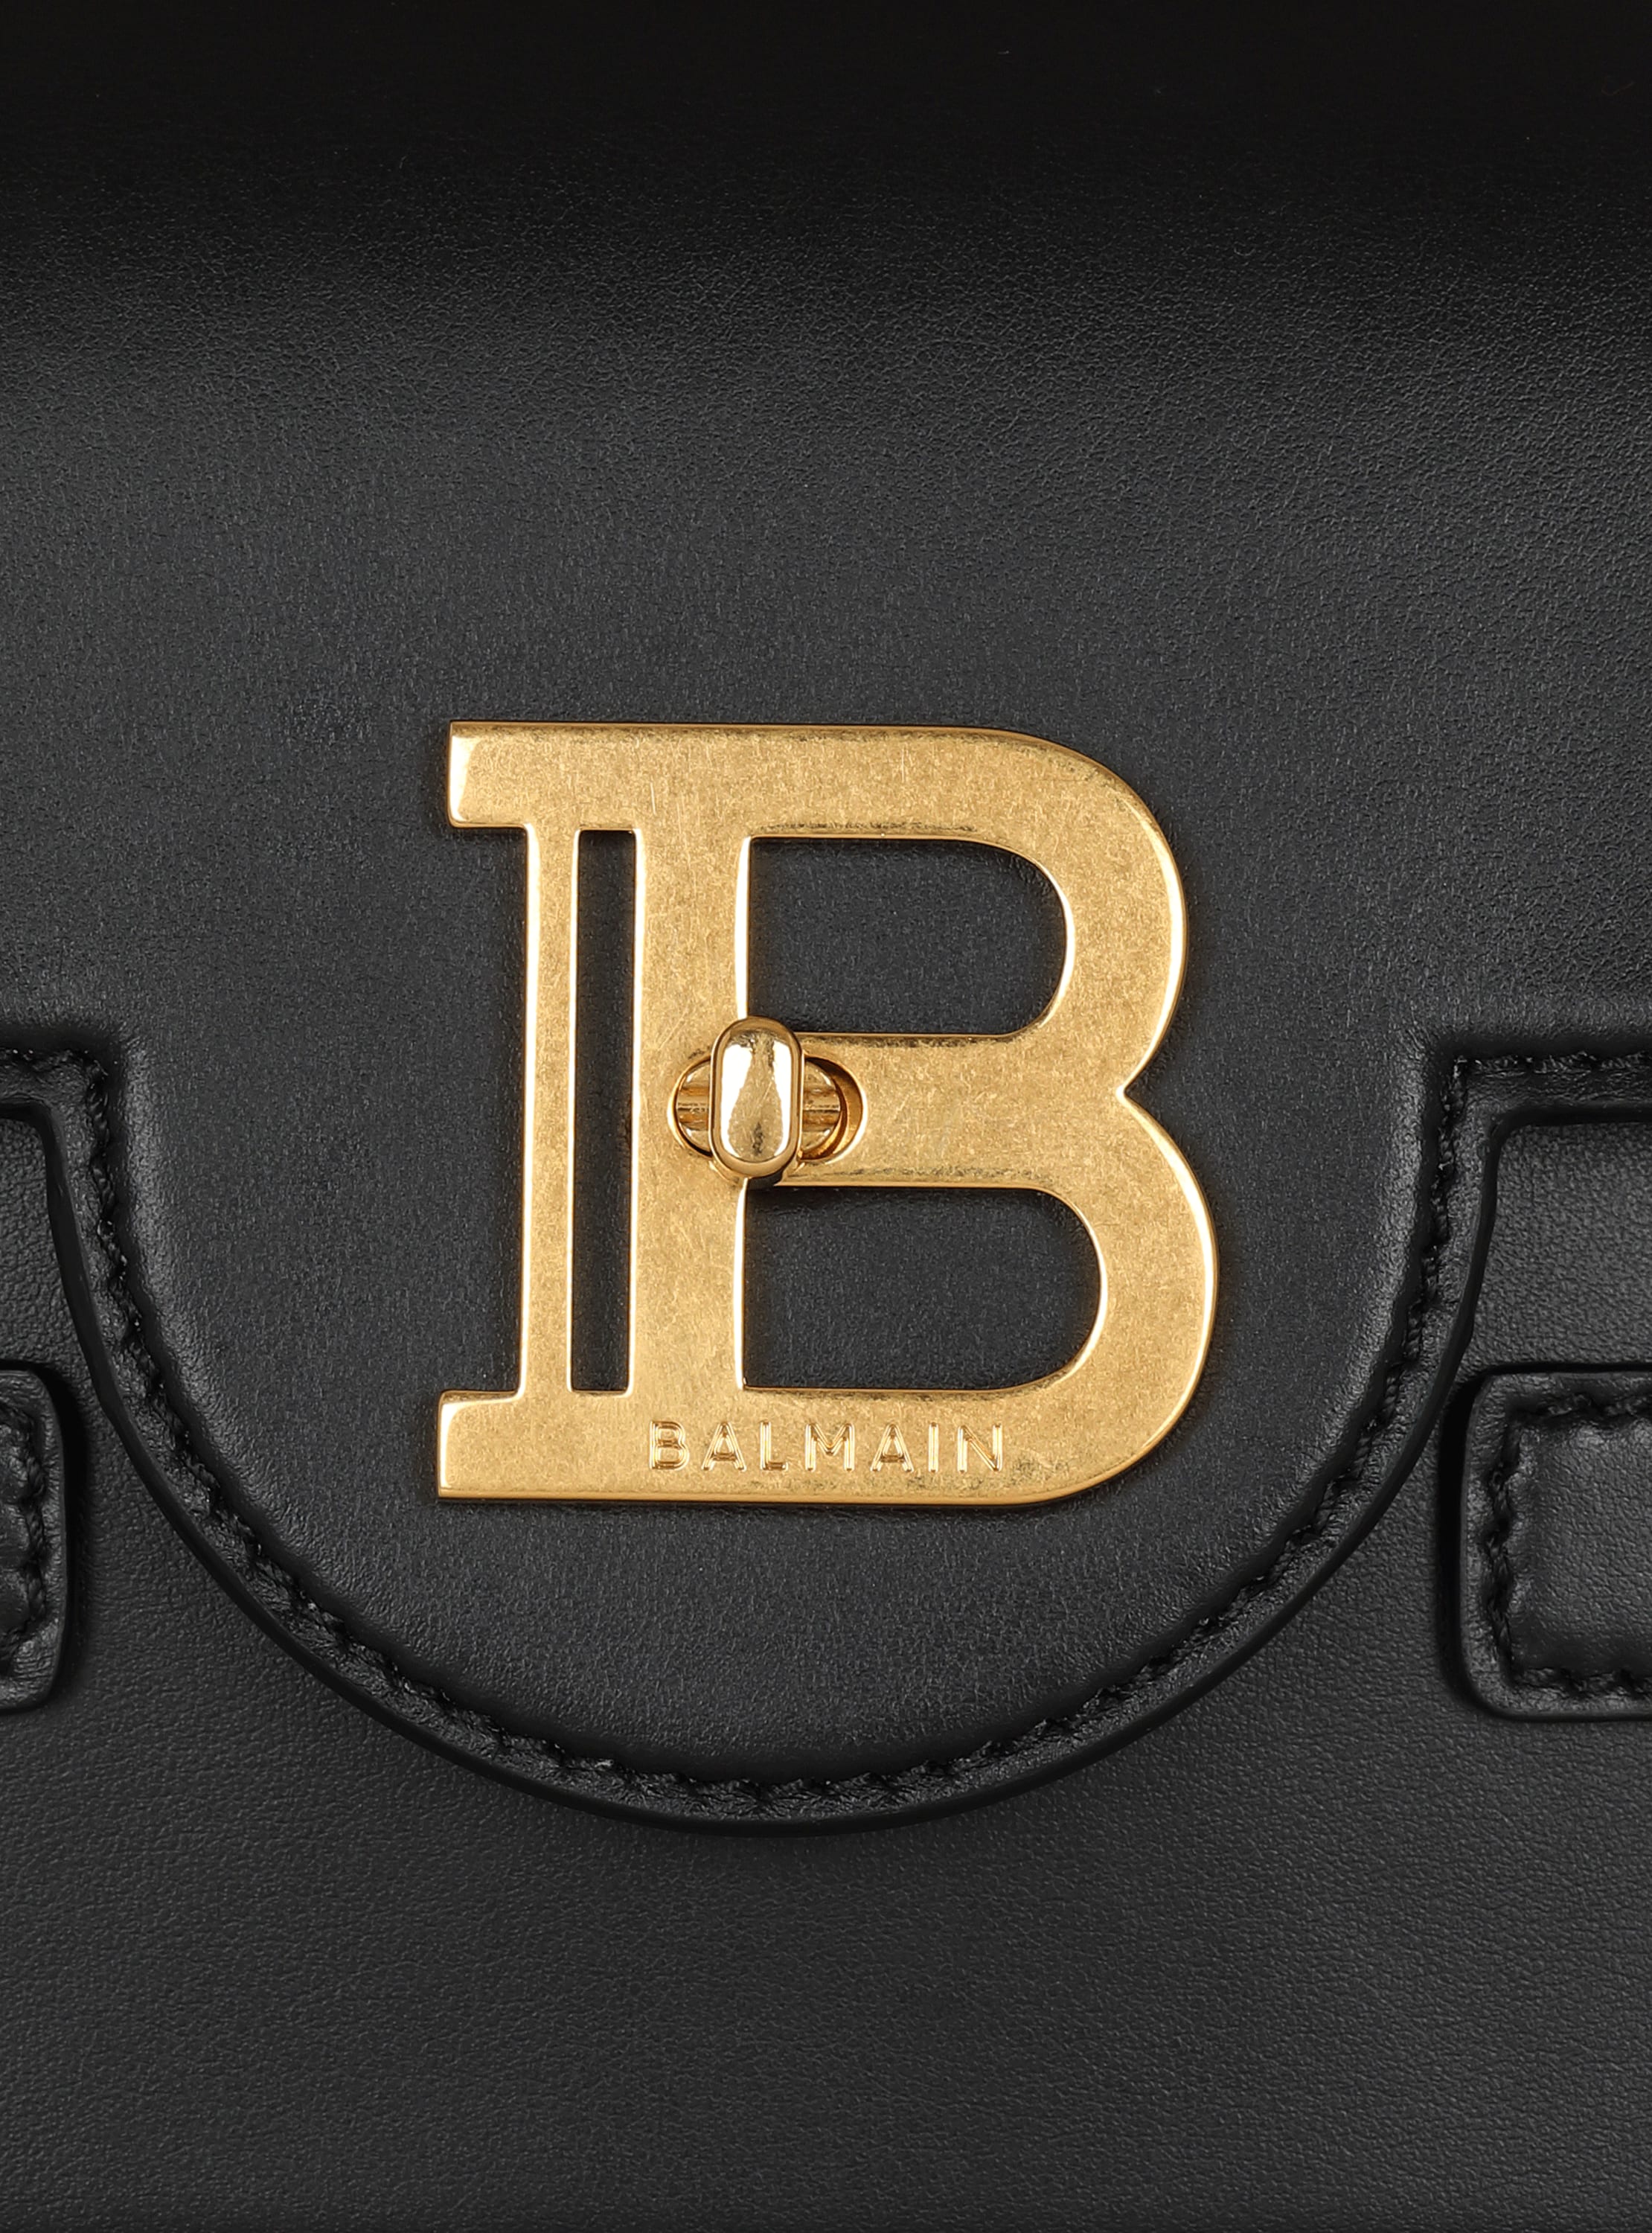 Mm purses – The B'Cute Brand